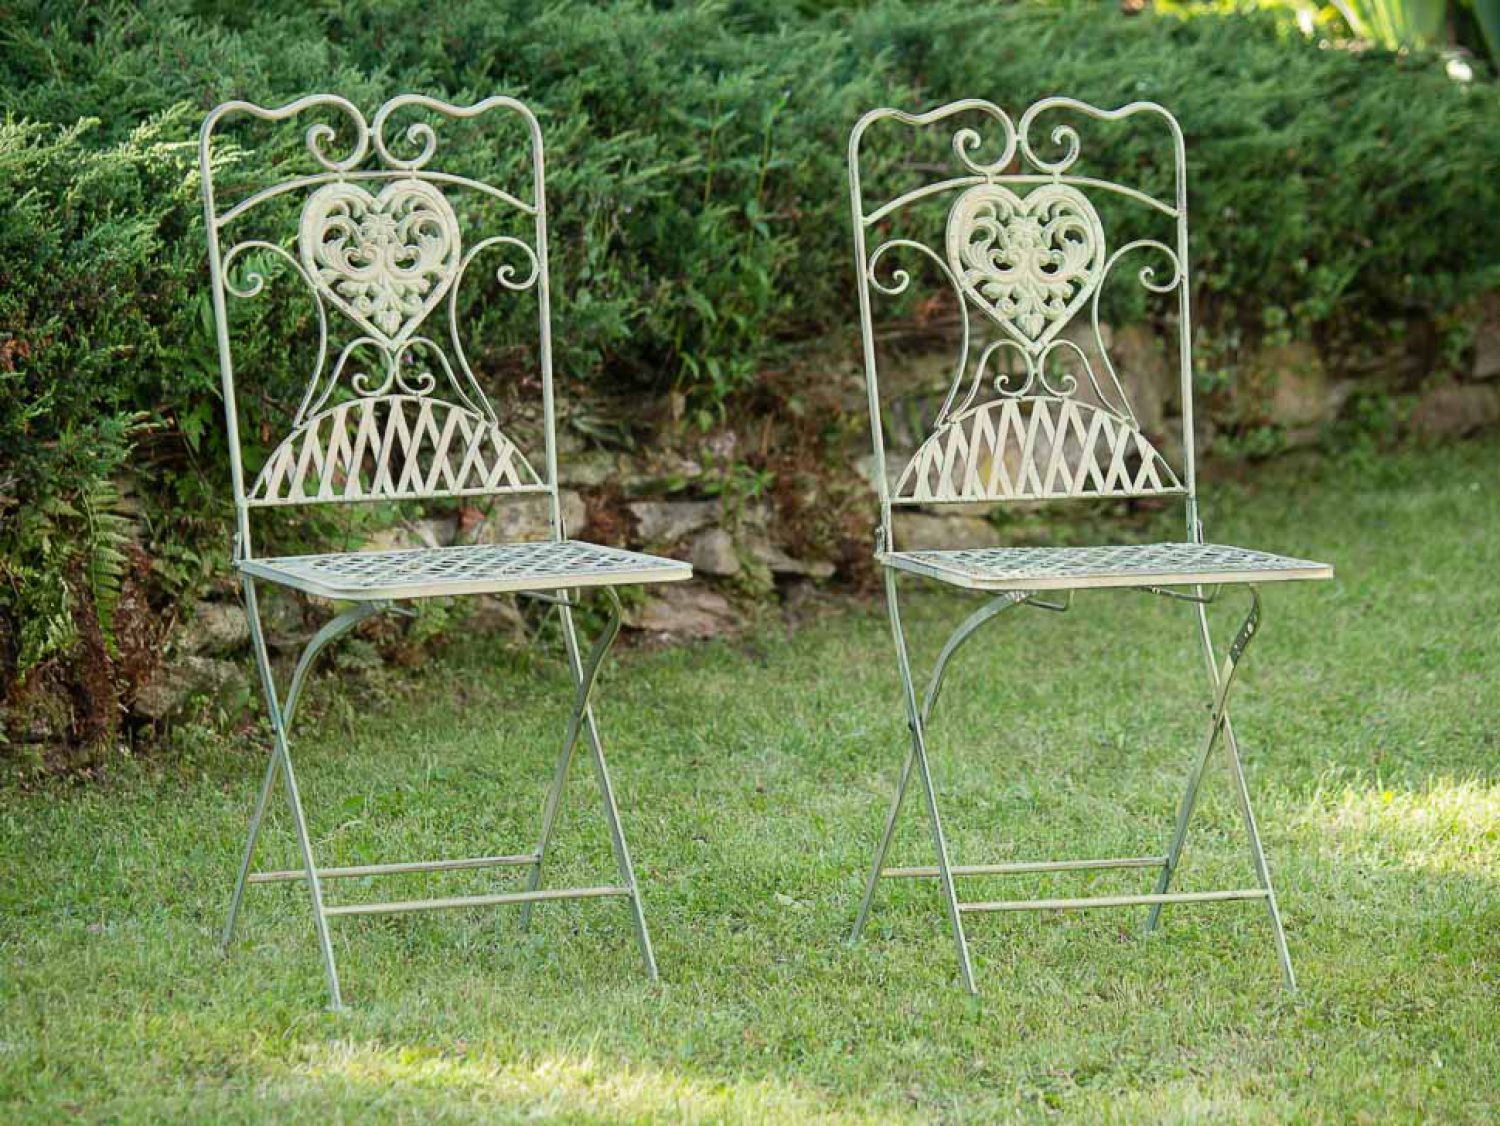  wrought iron garden furniture uk